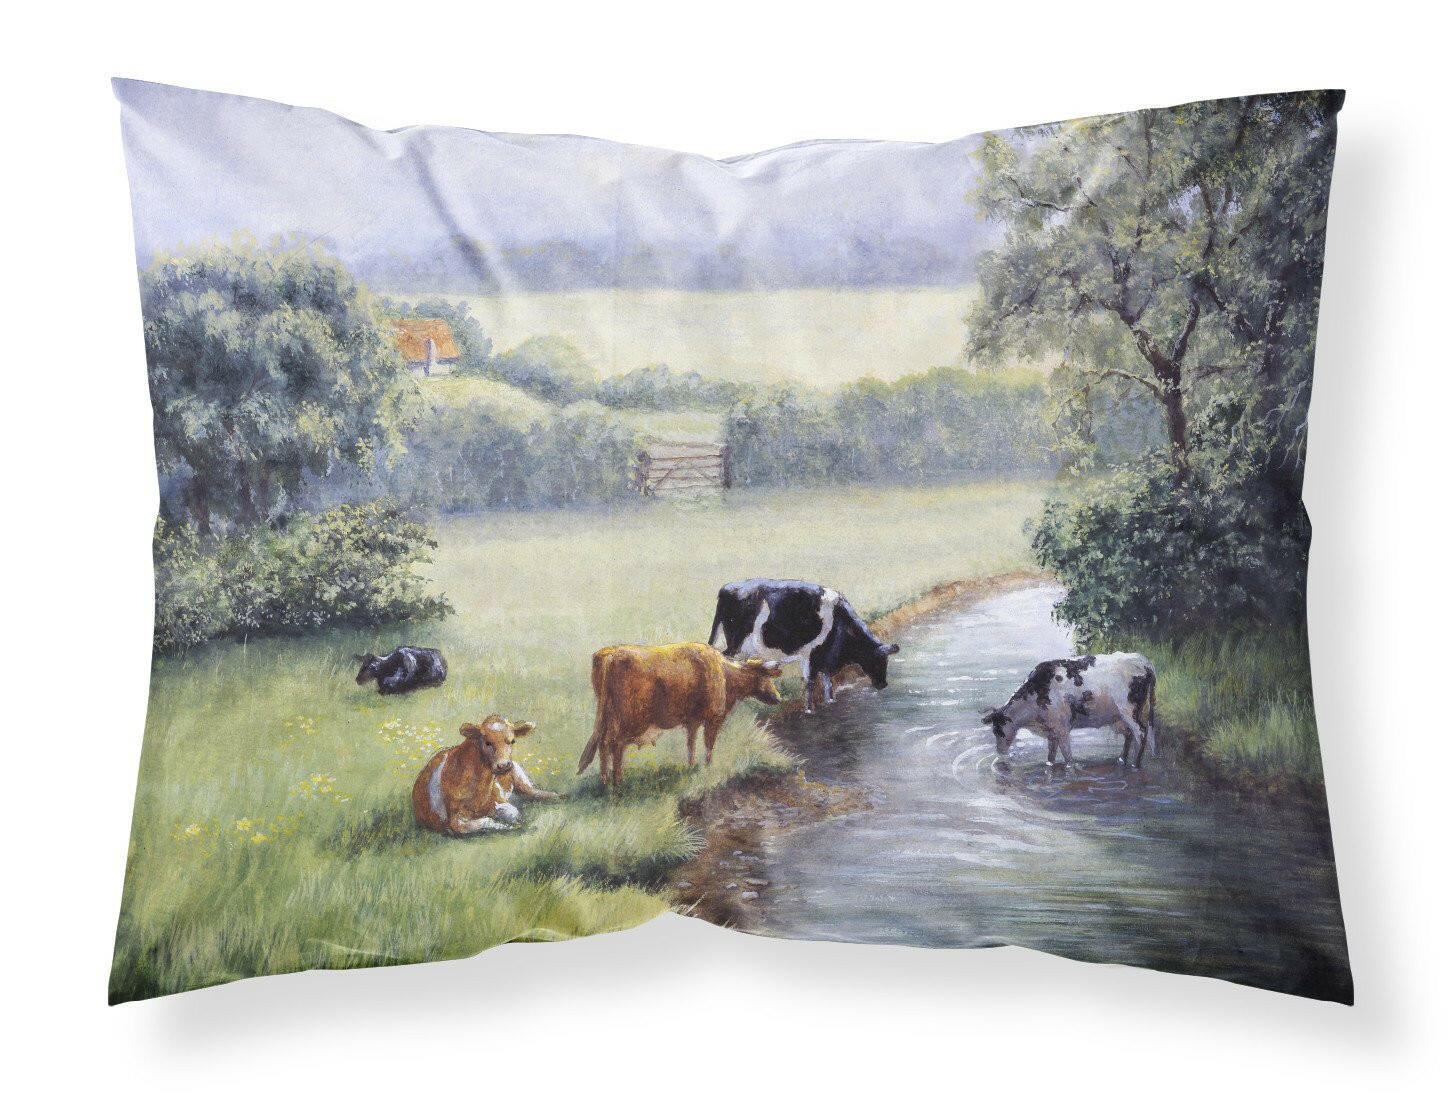 Cows Drinking at the Creek Bank Fabric Standard Pillowcase BDBA0350PILLOWCASE by Caroline's Treasures